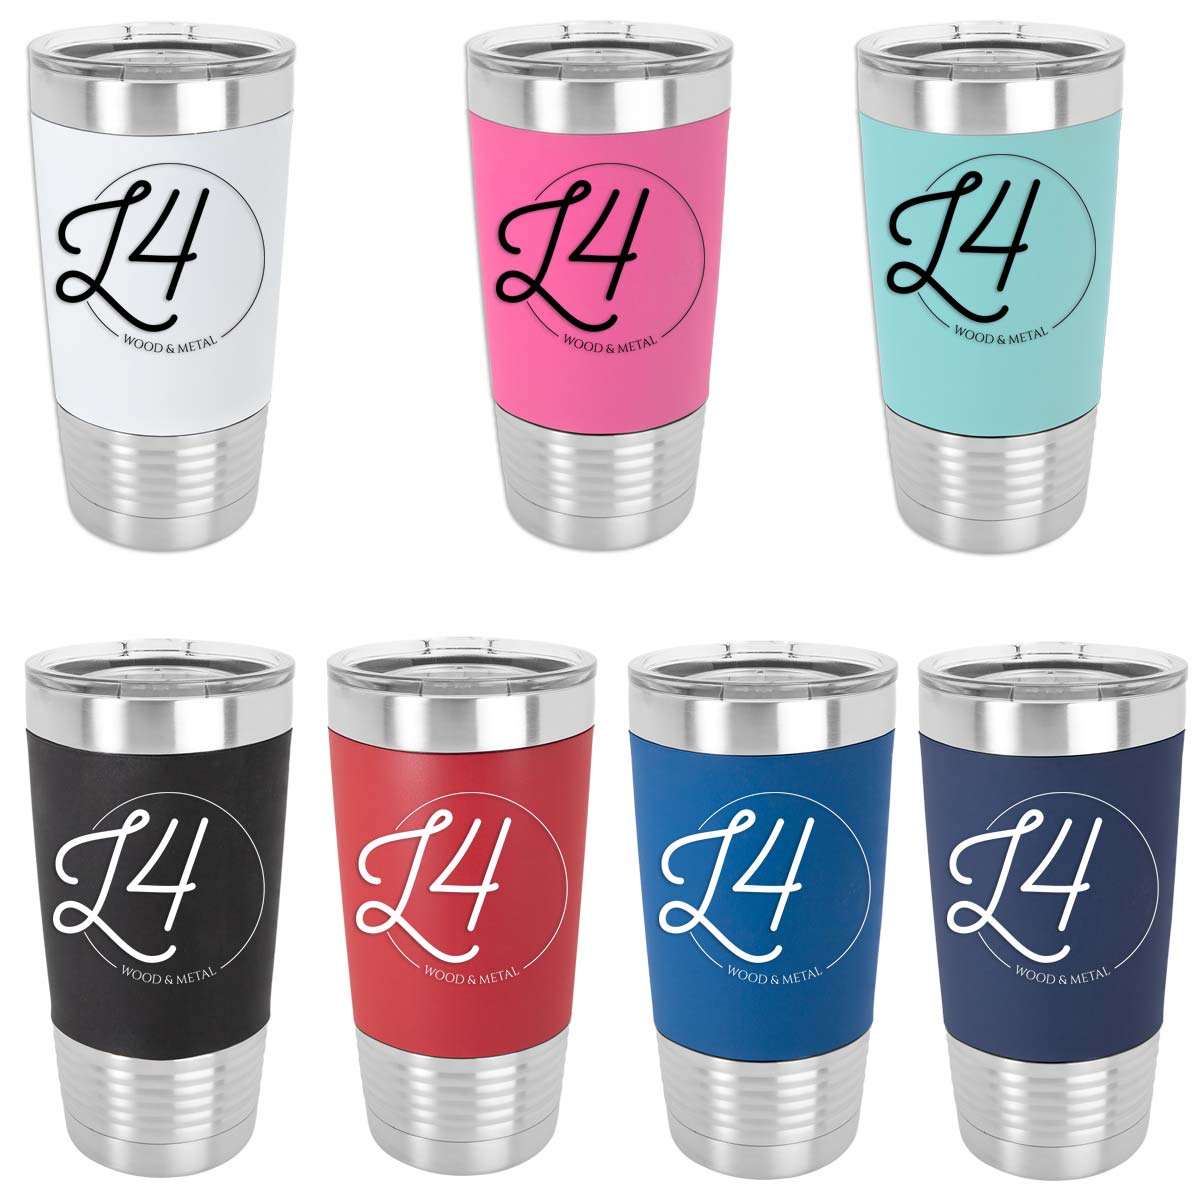 https://l4woodandmetal.com/wp-content/uploads/2021/11/custom-engraved-silicone-mugs-color-options.jpg